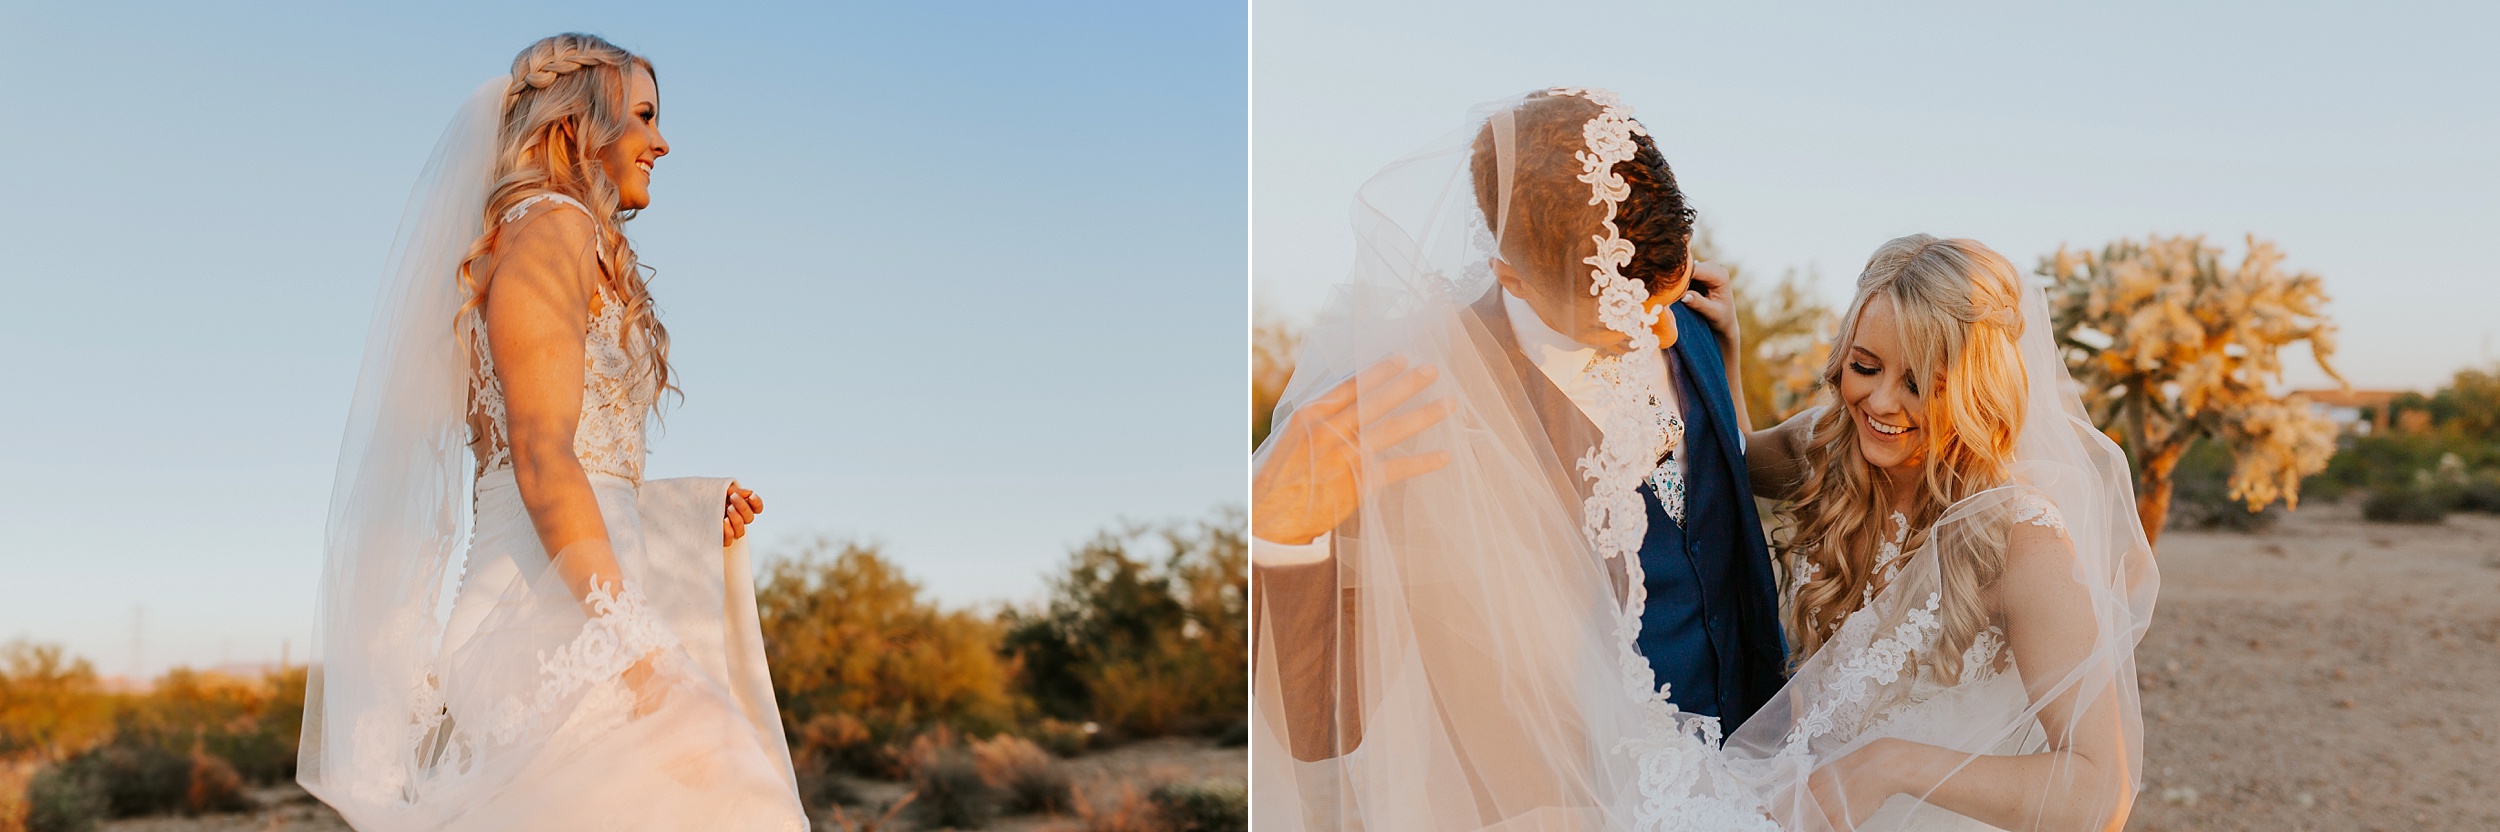 Meg+Bubba_Wedding_Bride+Groom_Portraits_Arizona-215.jpg